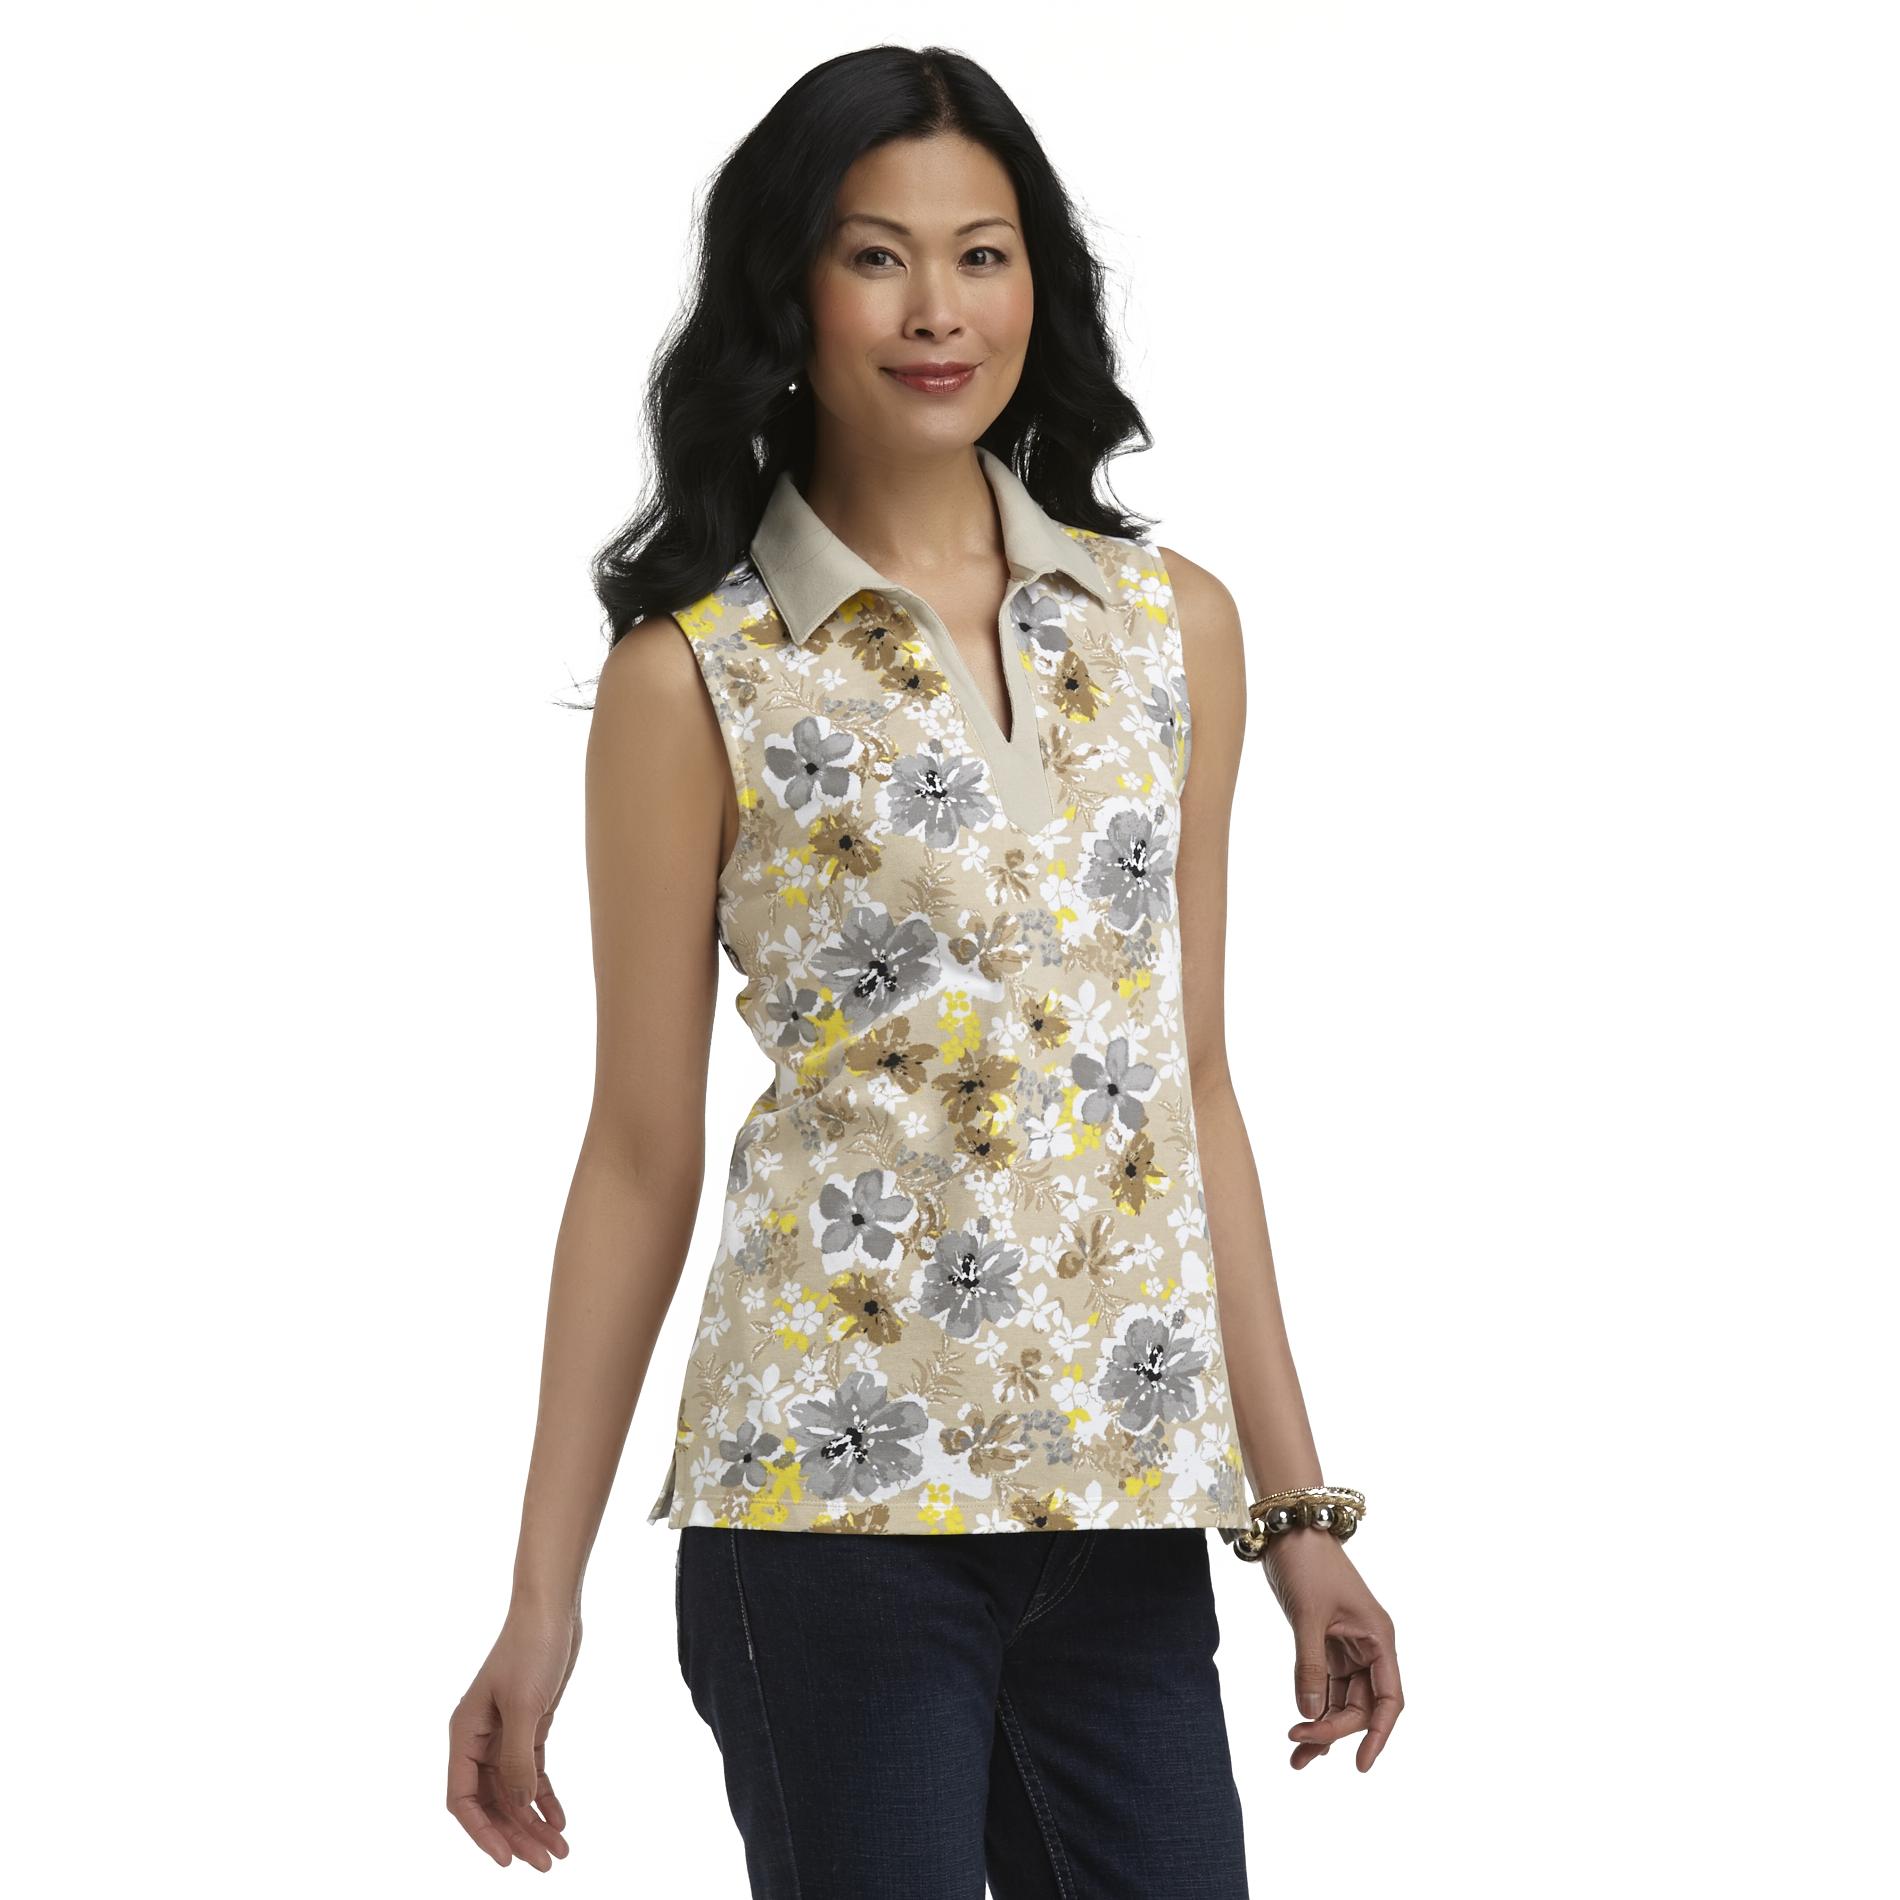 Basic Editions Women's Sleeveless Shirt - Floral